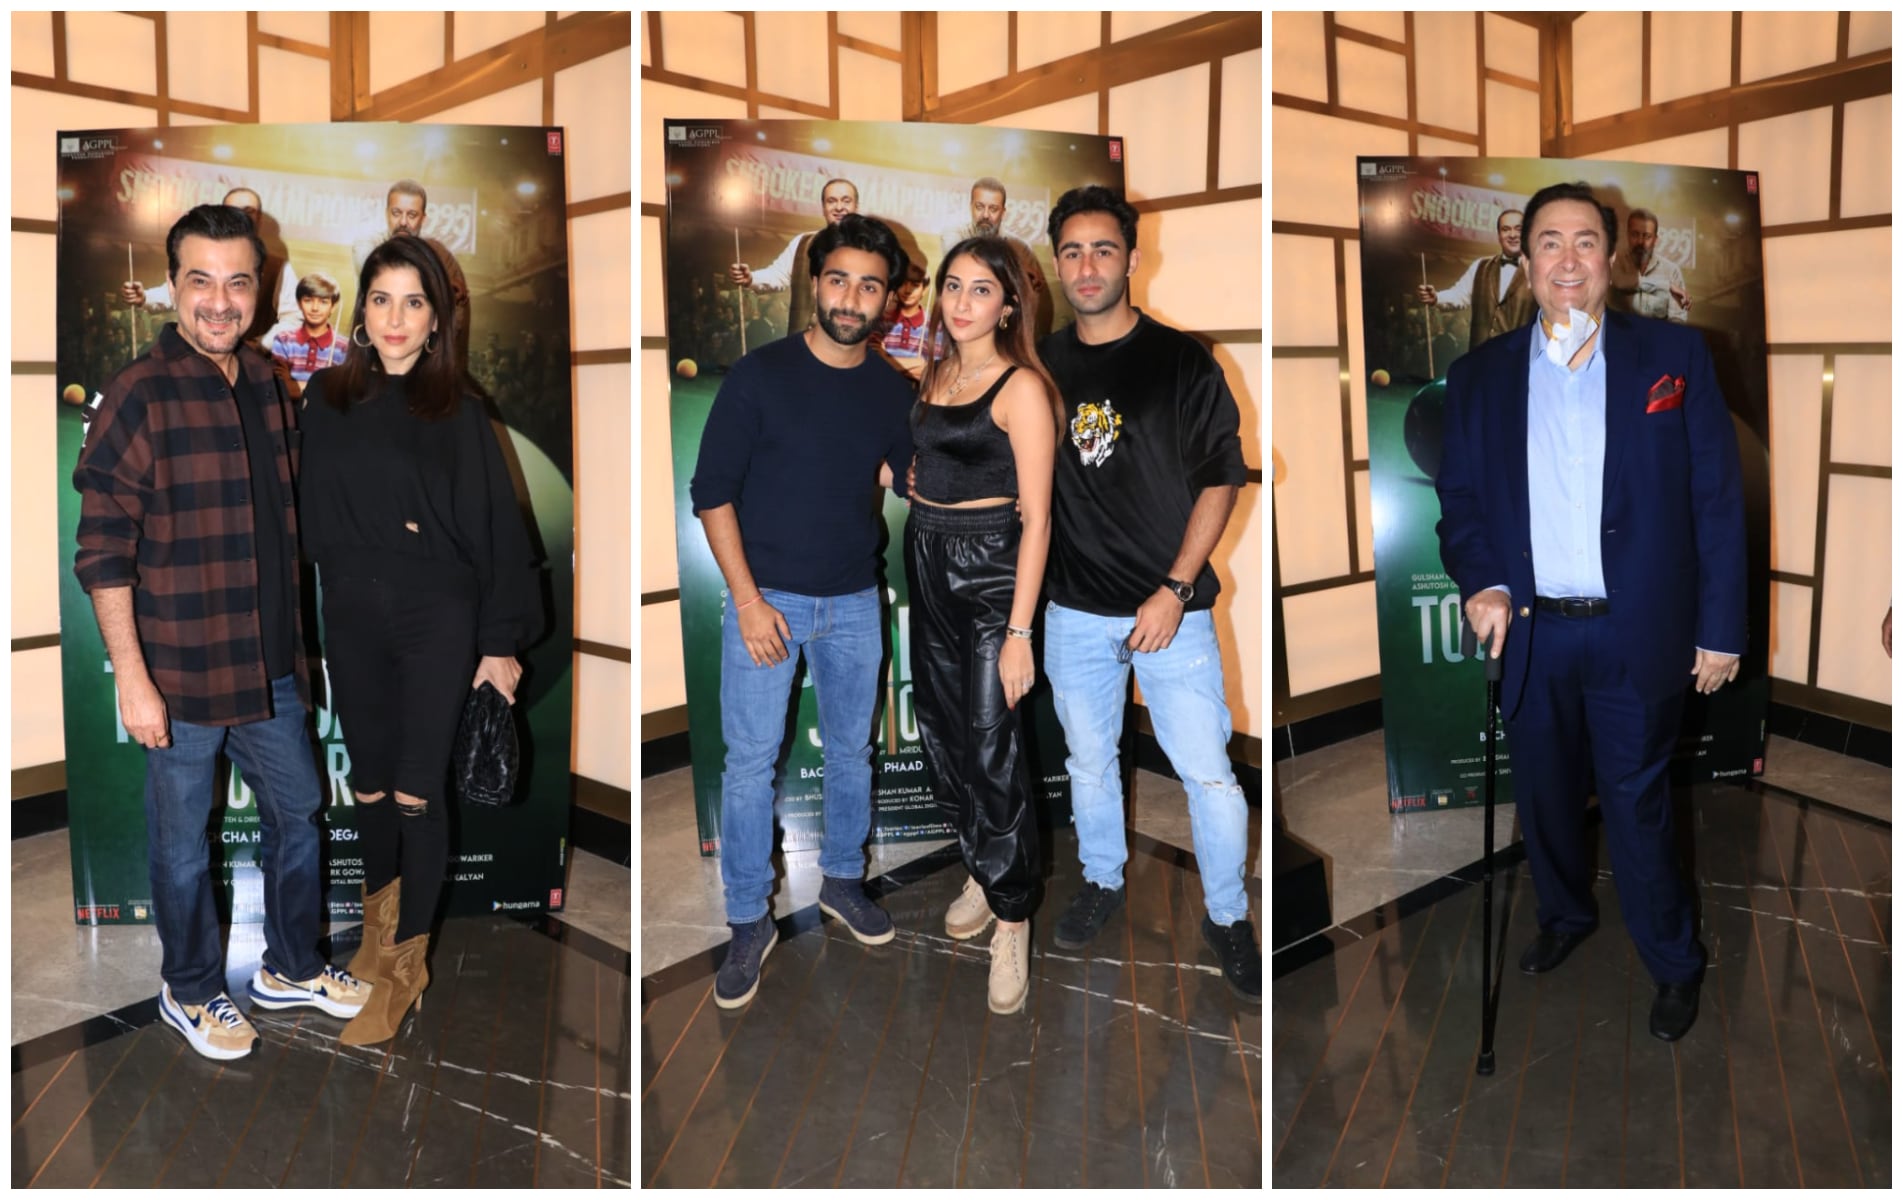 The screening also featured Sanjay Kapoor, Maheep Kapoor, Armaan Jain, Aadar Jain, Anissa Malhotra and Randhir Kapoor.